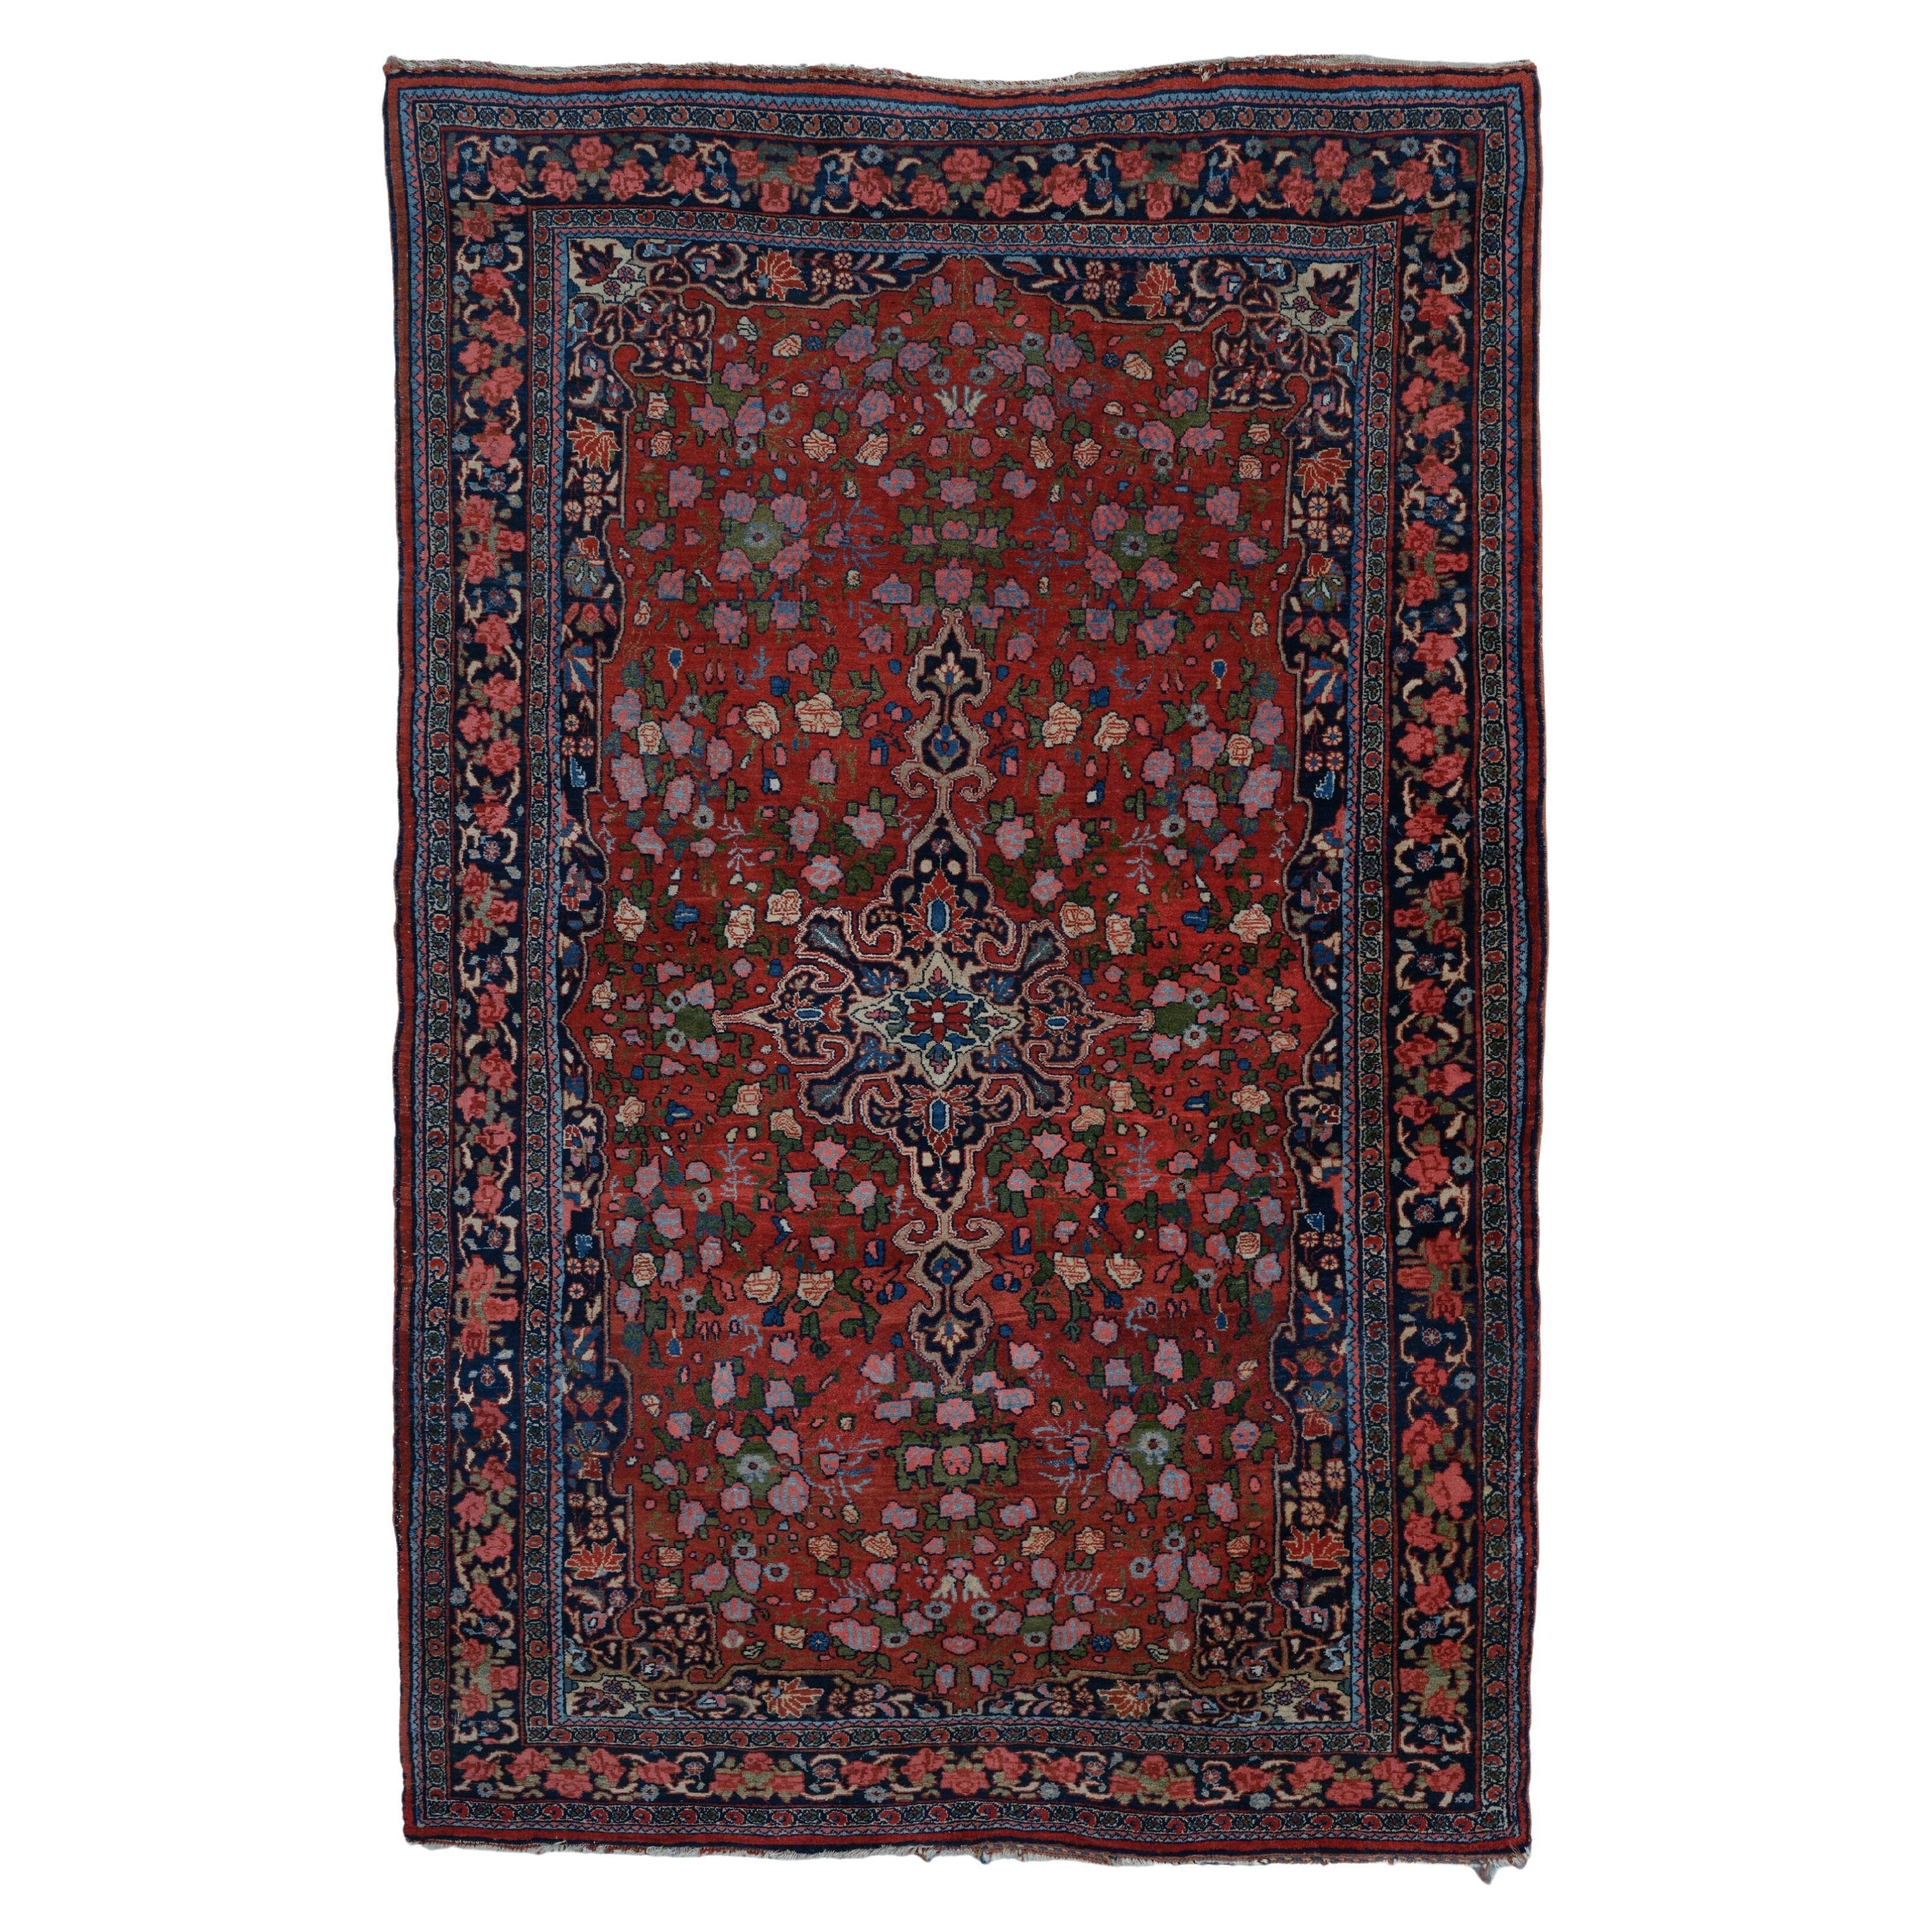 Antiker Bidjar-Teppich - Bidjar-Teppich des 19. Jahrhunderts, handgewebter Teppich, antiker Teppich